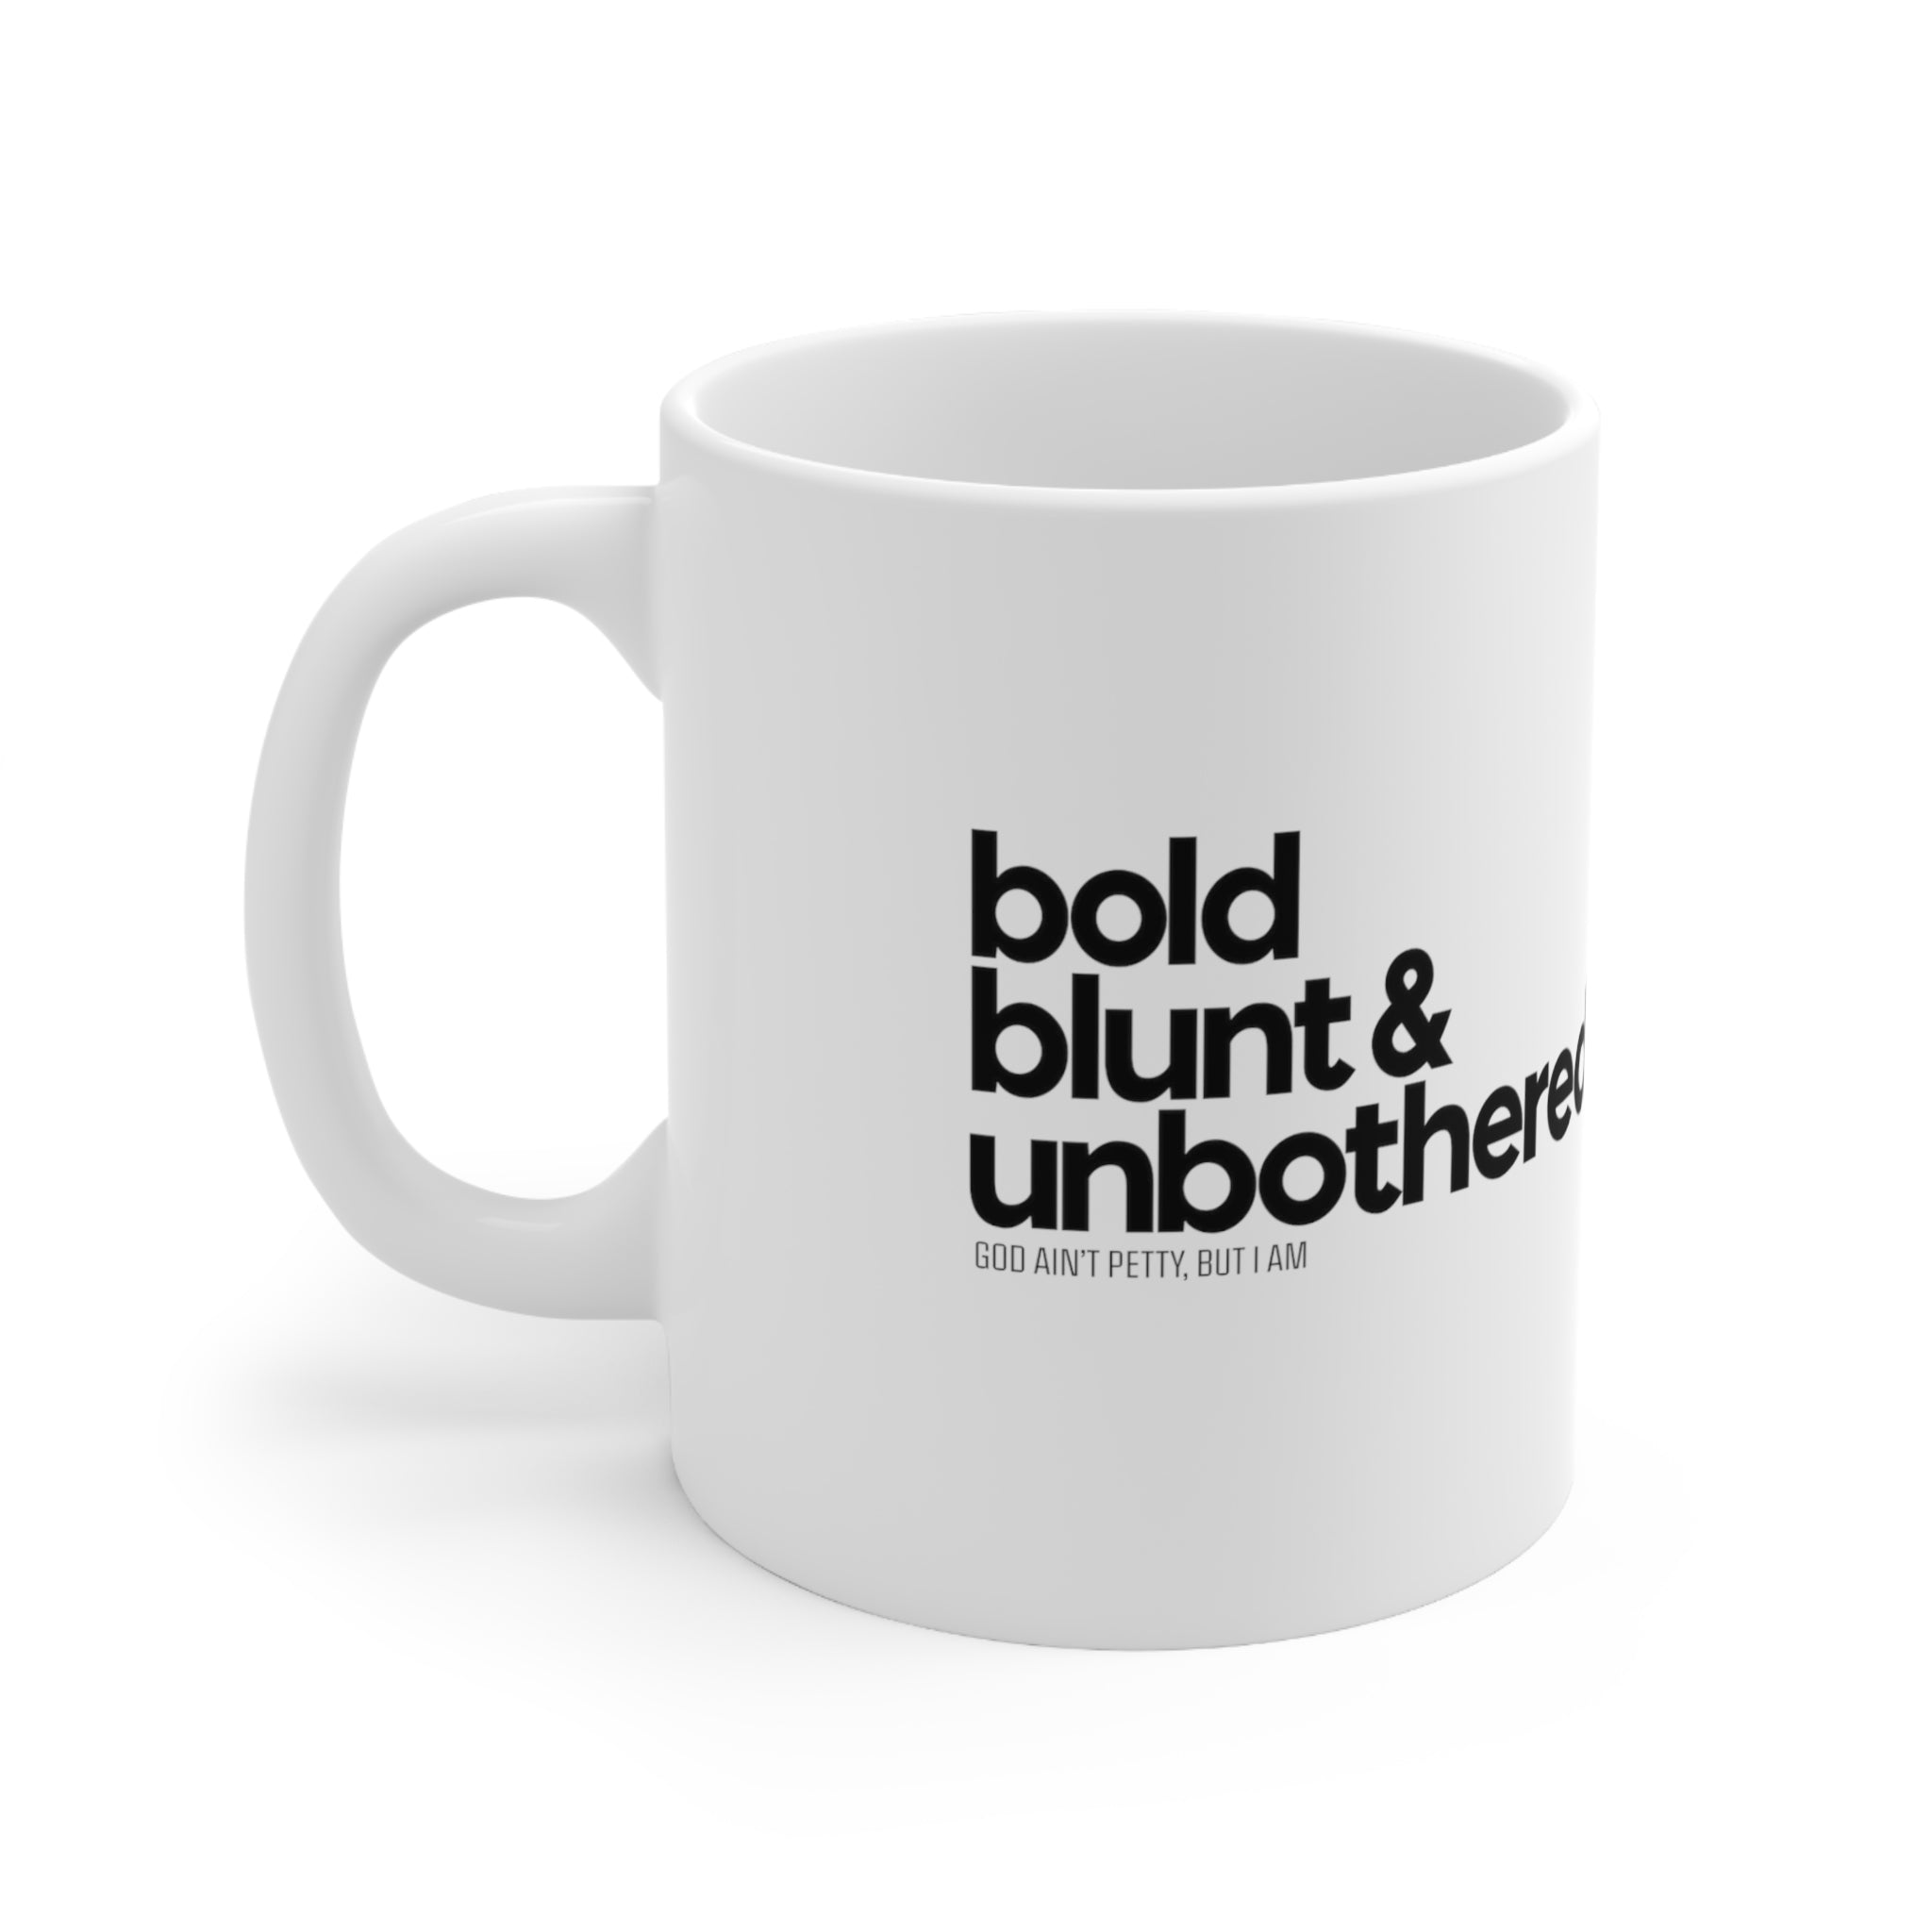 Bold Blunt & Unbothered Mug 11oz (White/Black)-Mug-The Original God Ain't Petty But I Am